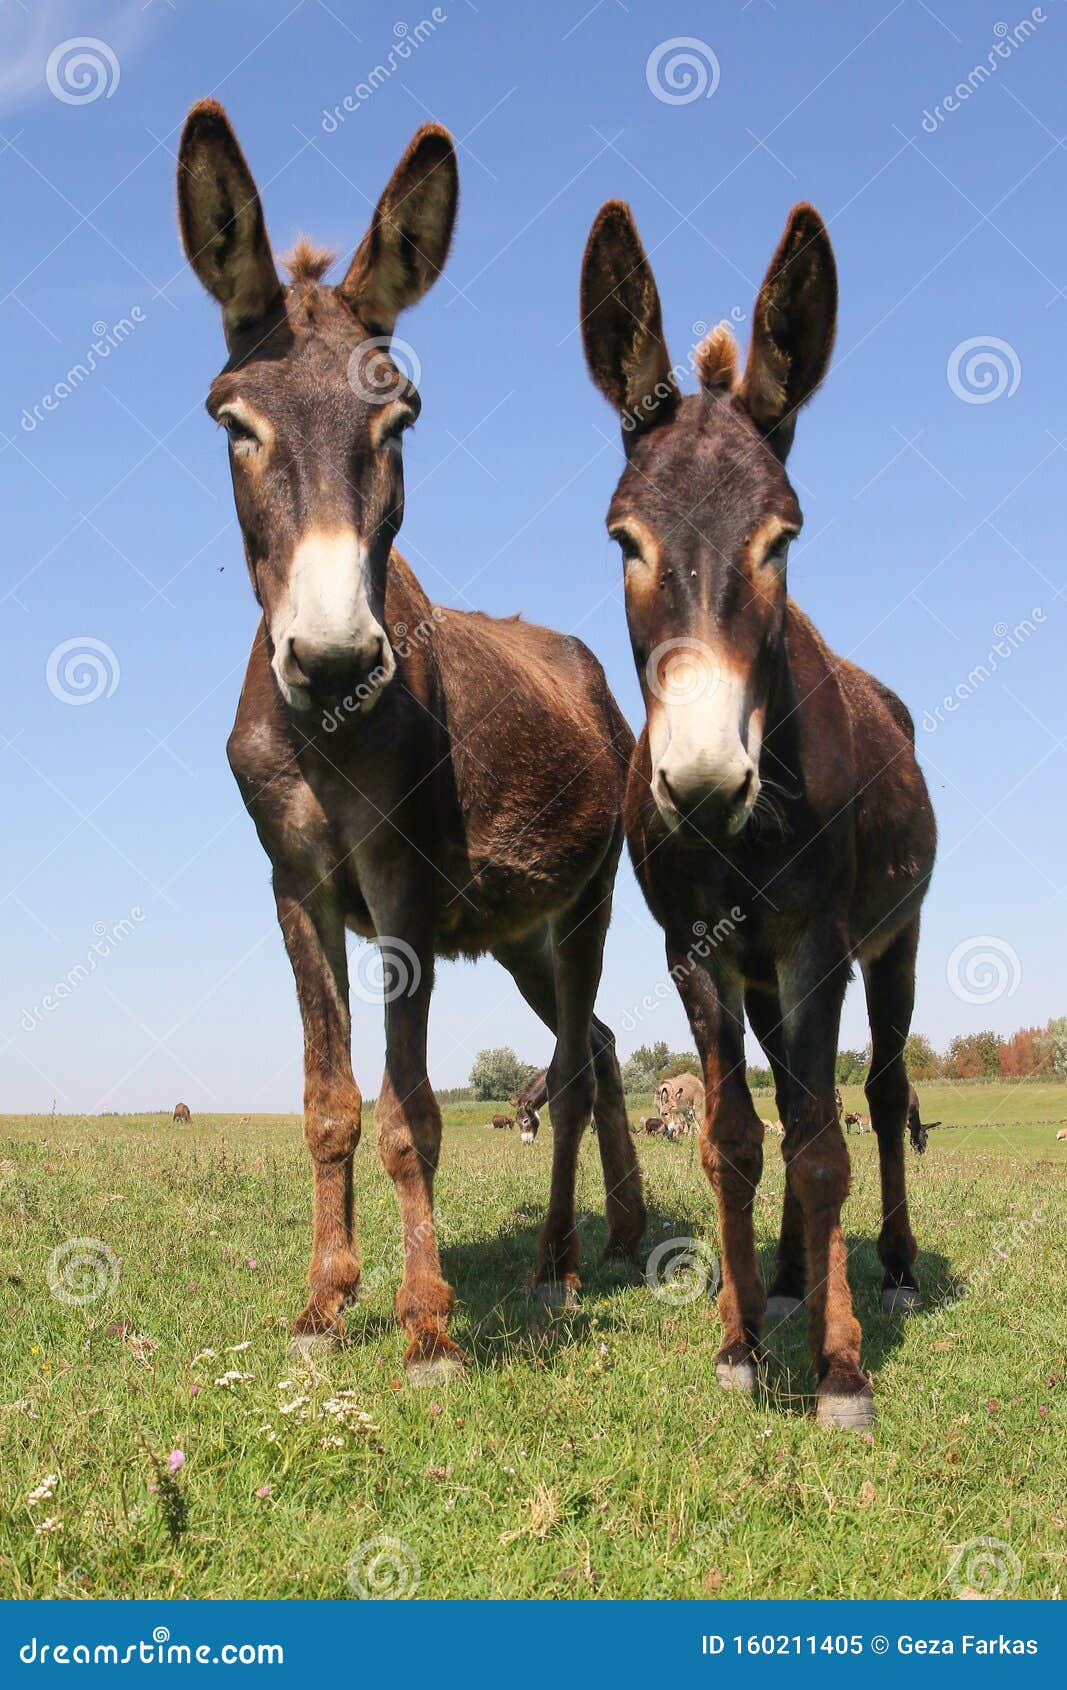 Portrait Of Two Funny Cartoon Like Donkeys Stock Image - Image of ...